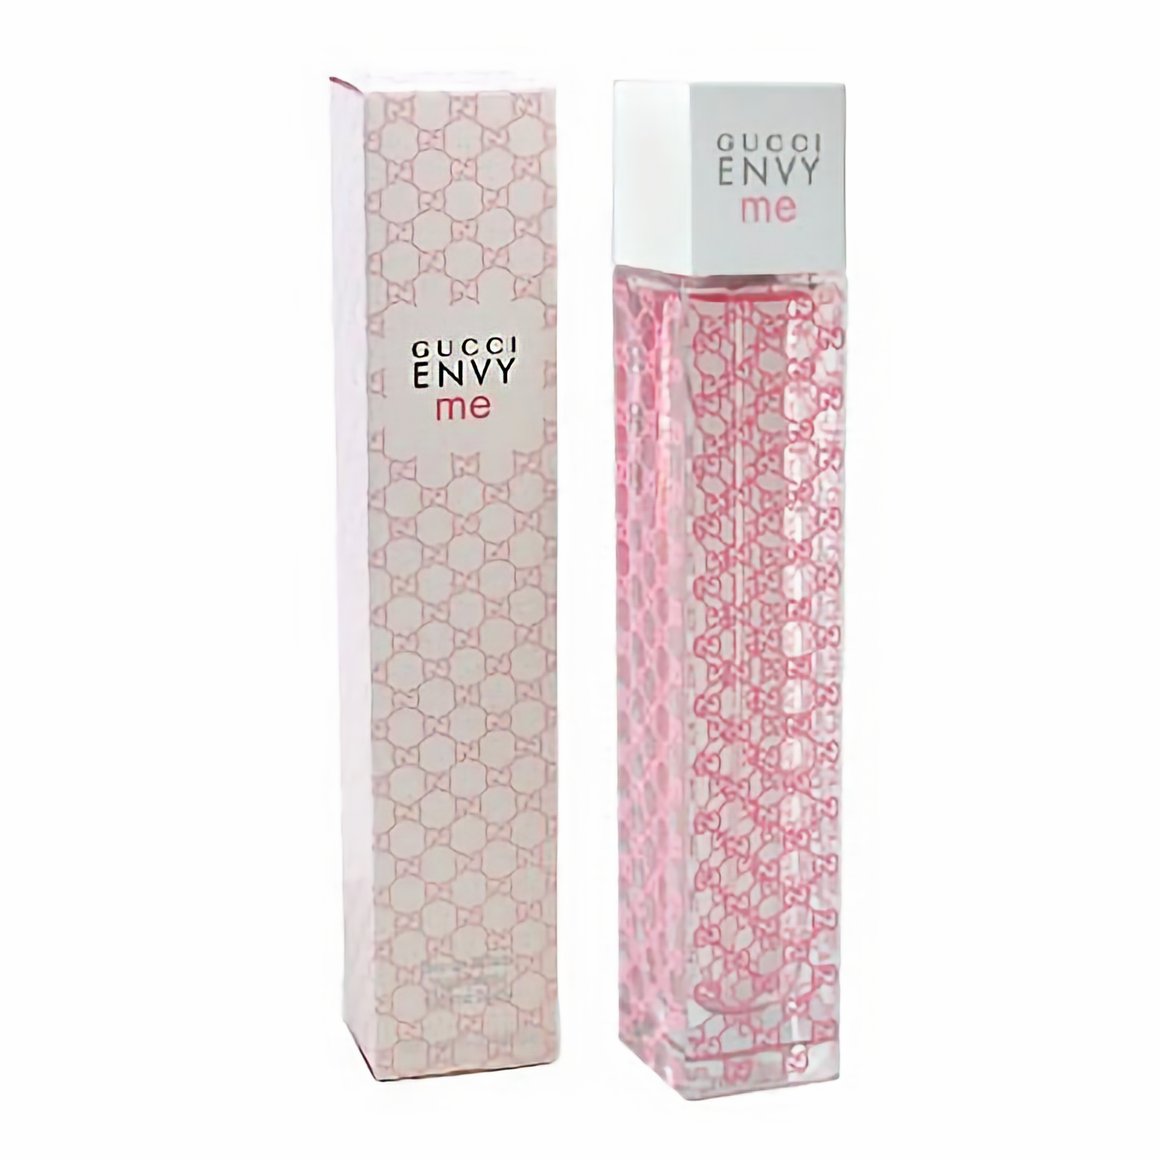 gucci envy similar perfume